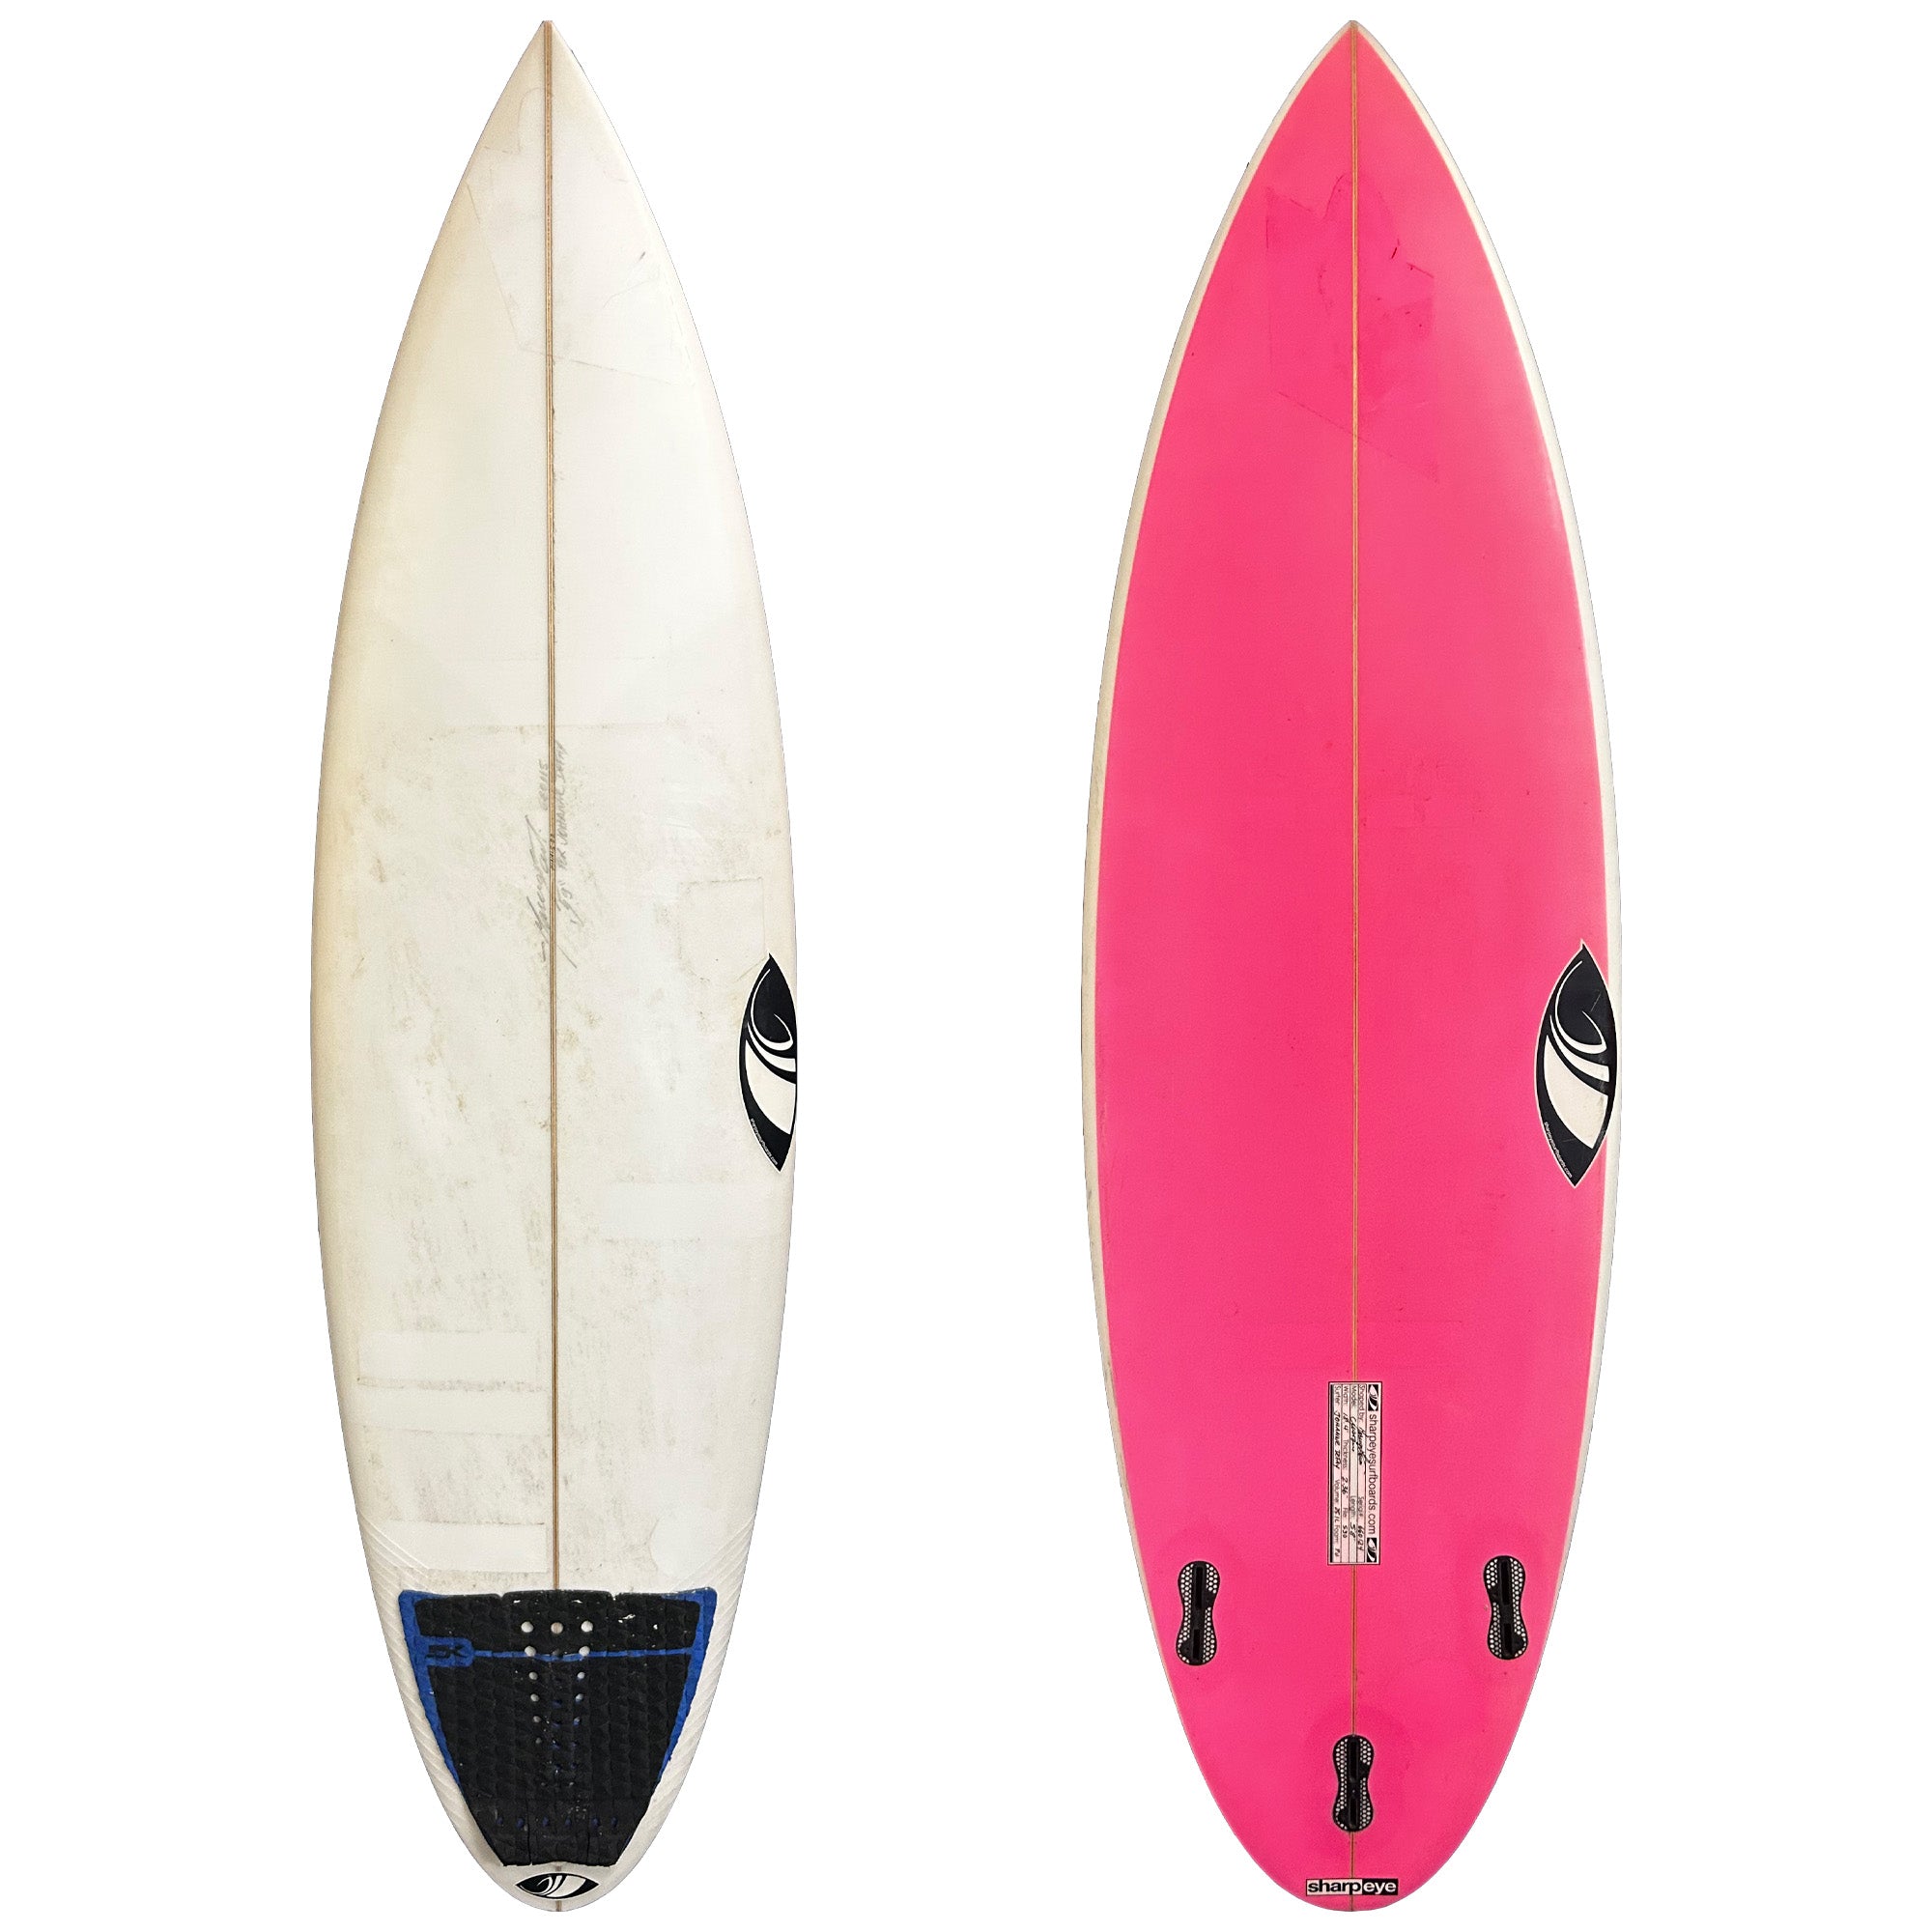 Sharp Eye 5'8 Consignment Surfboard